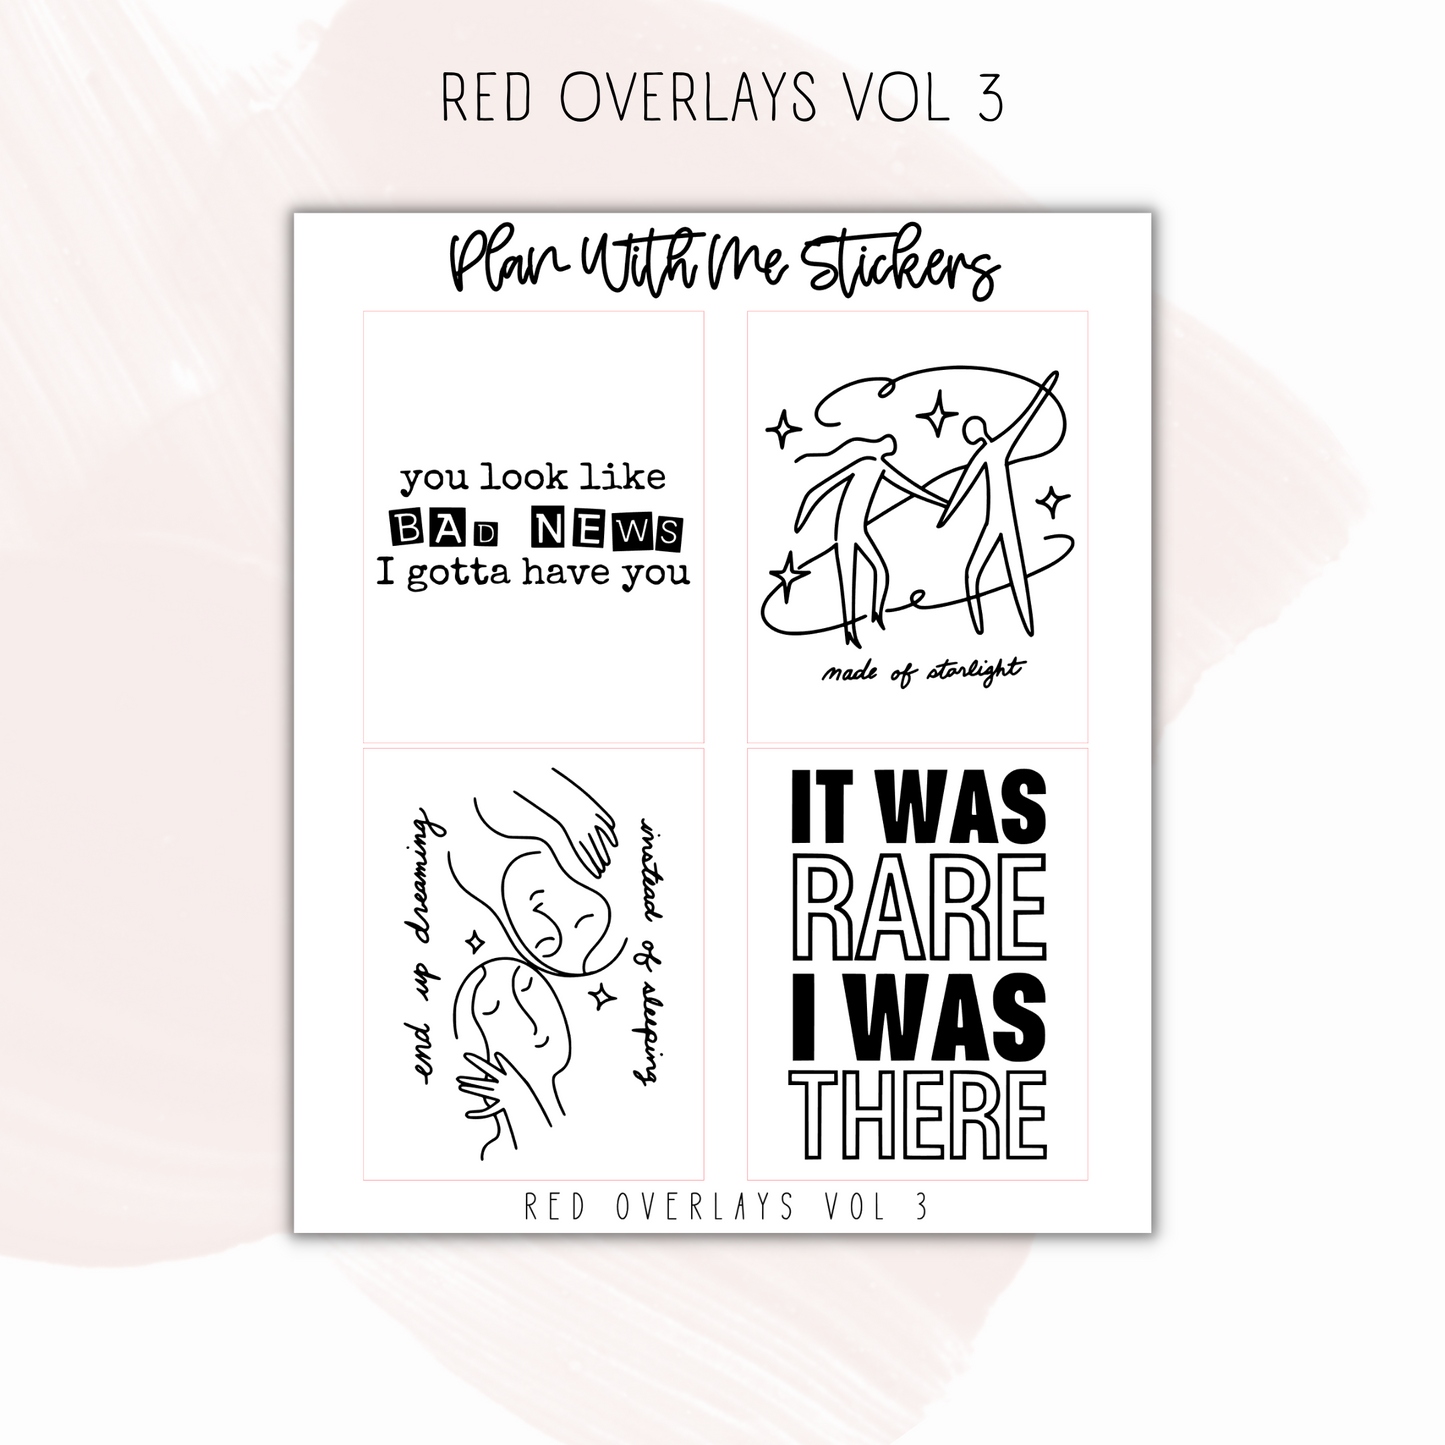 Red Overlays Vol 3